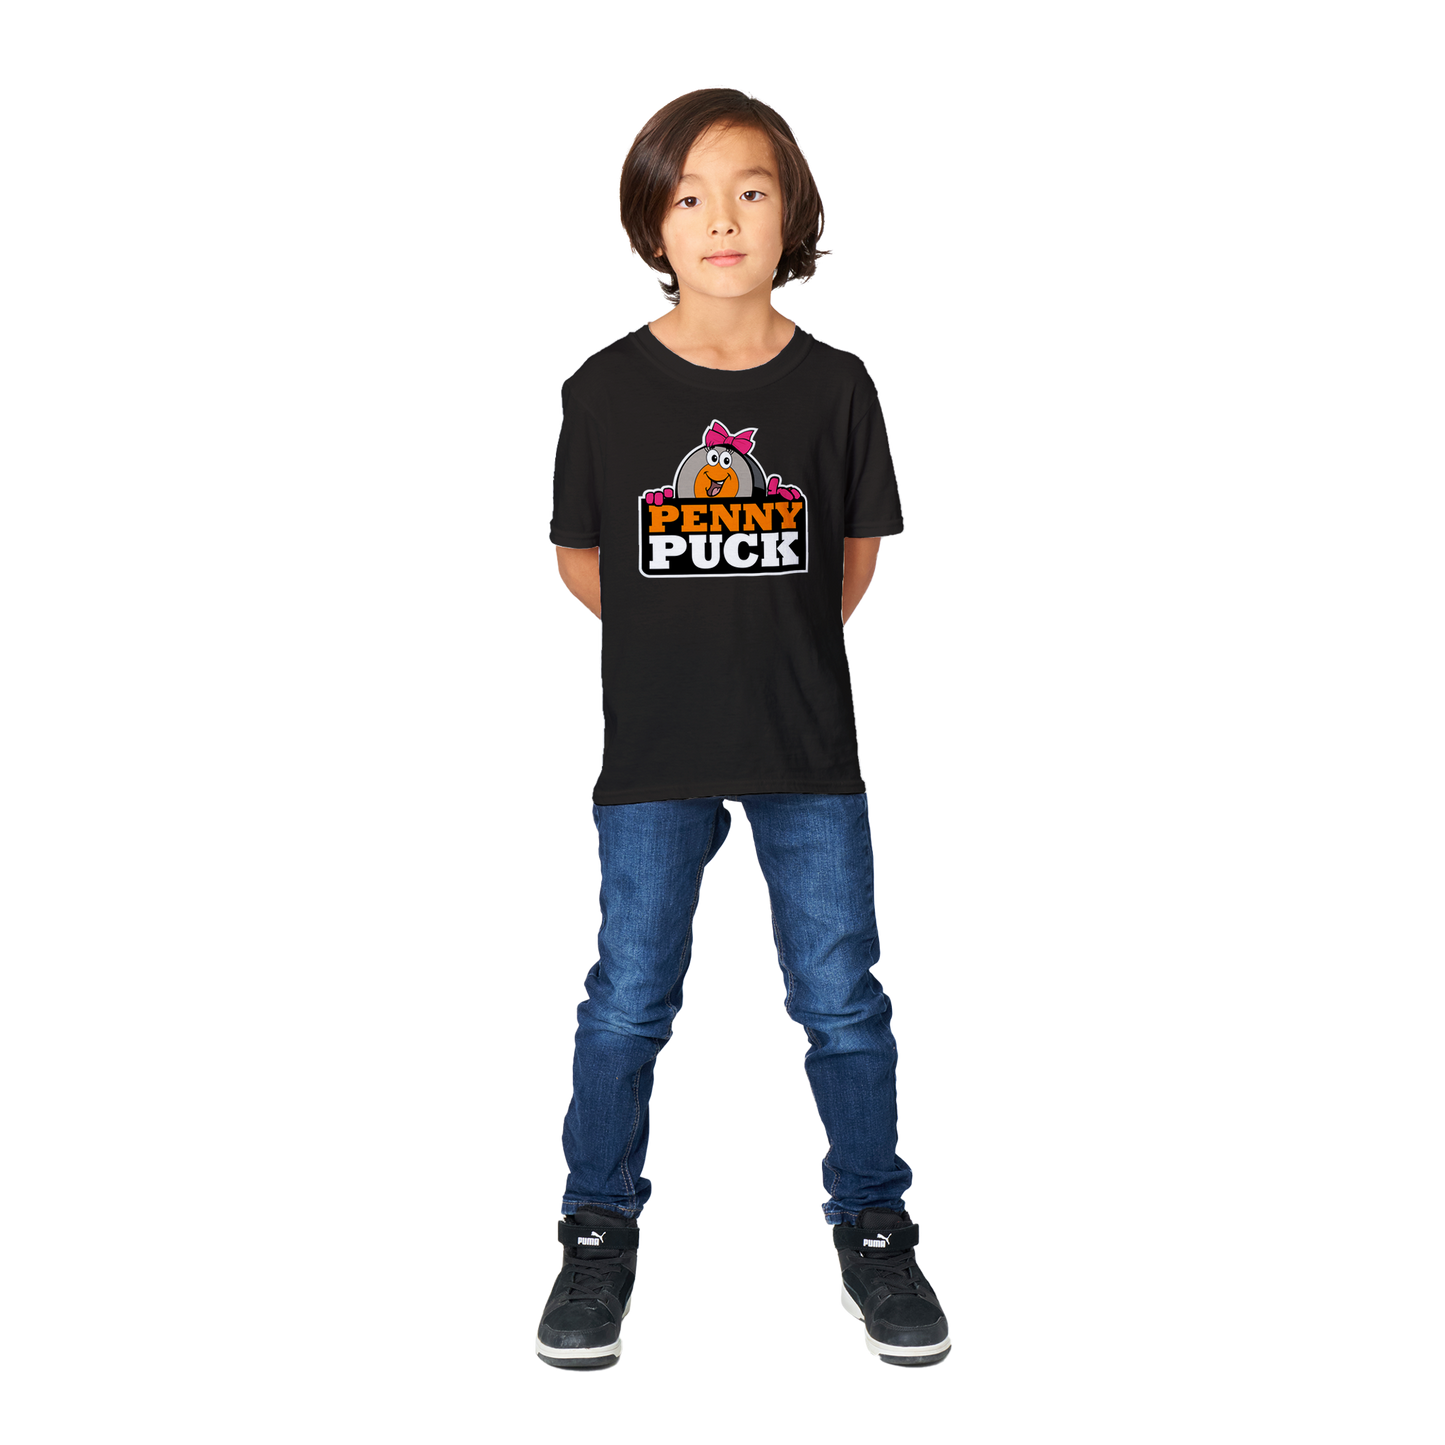 Penny Puck Peek Classic Kids Crewneck T-shirt